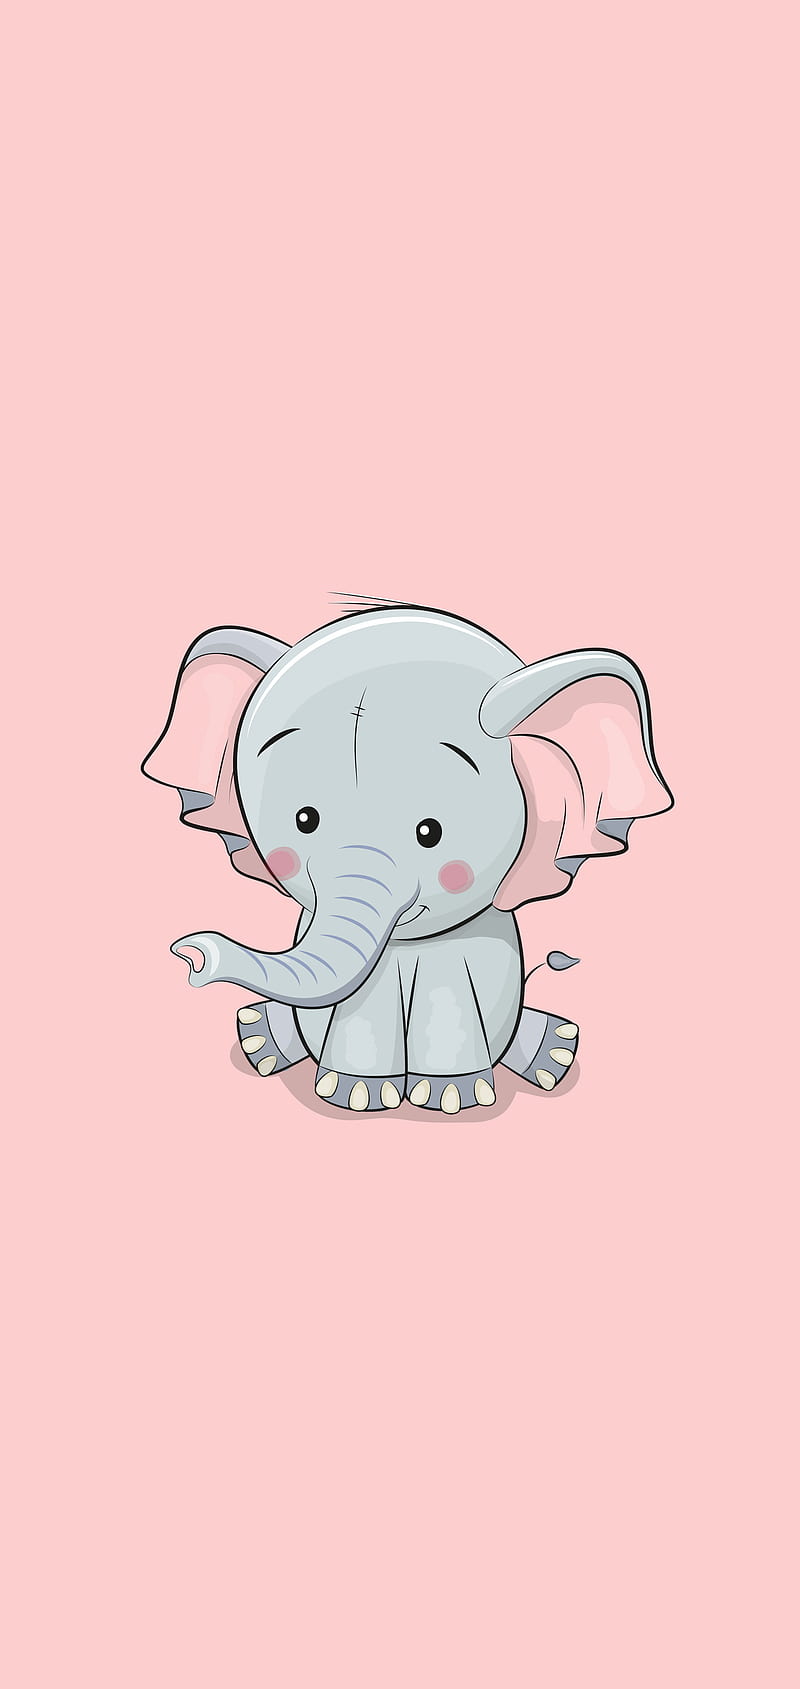 A cute little elephant sitting on the ground - Elephant